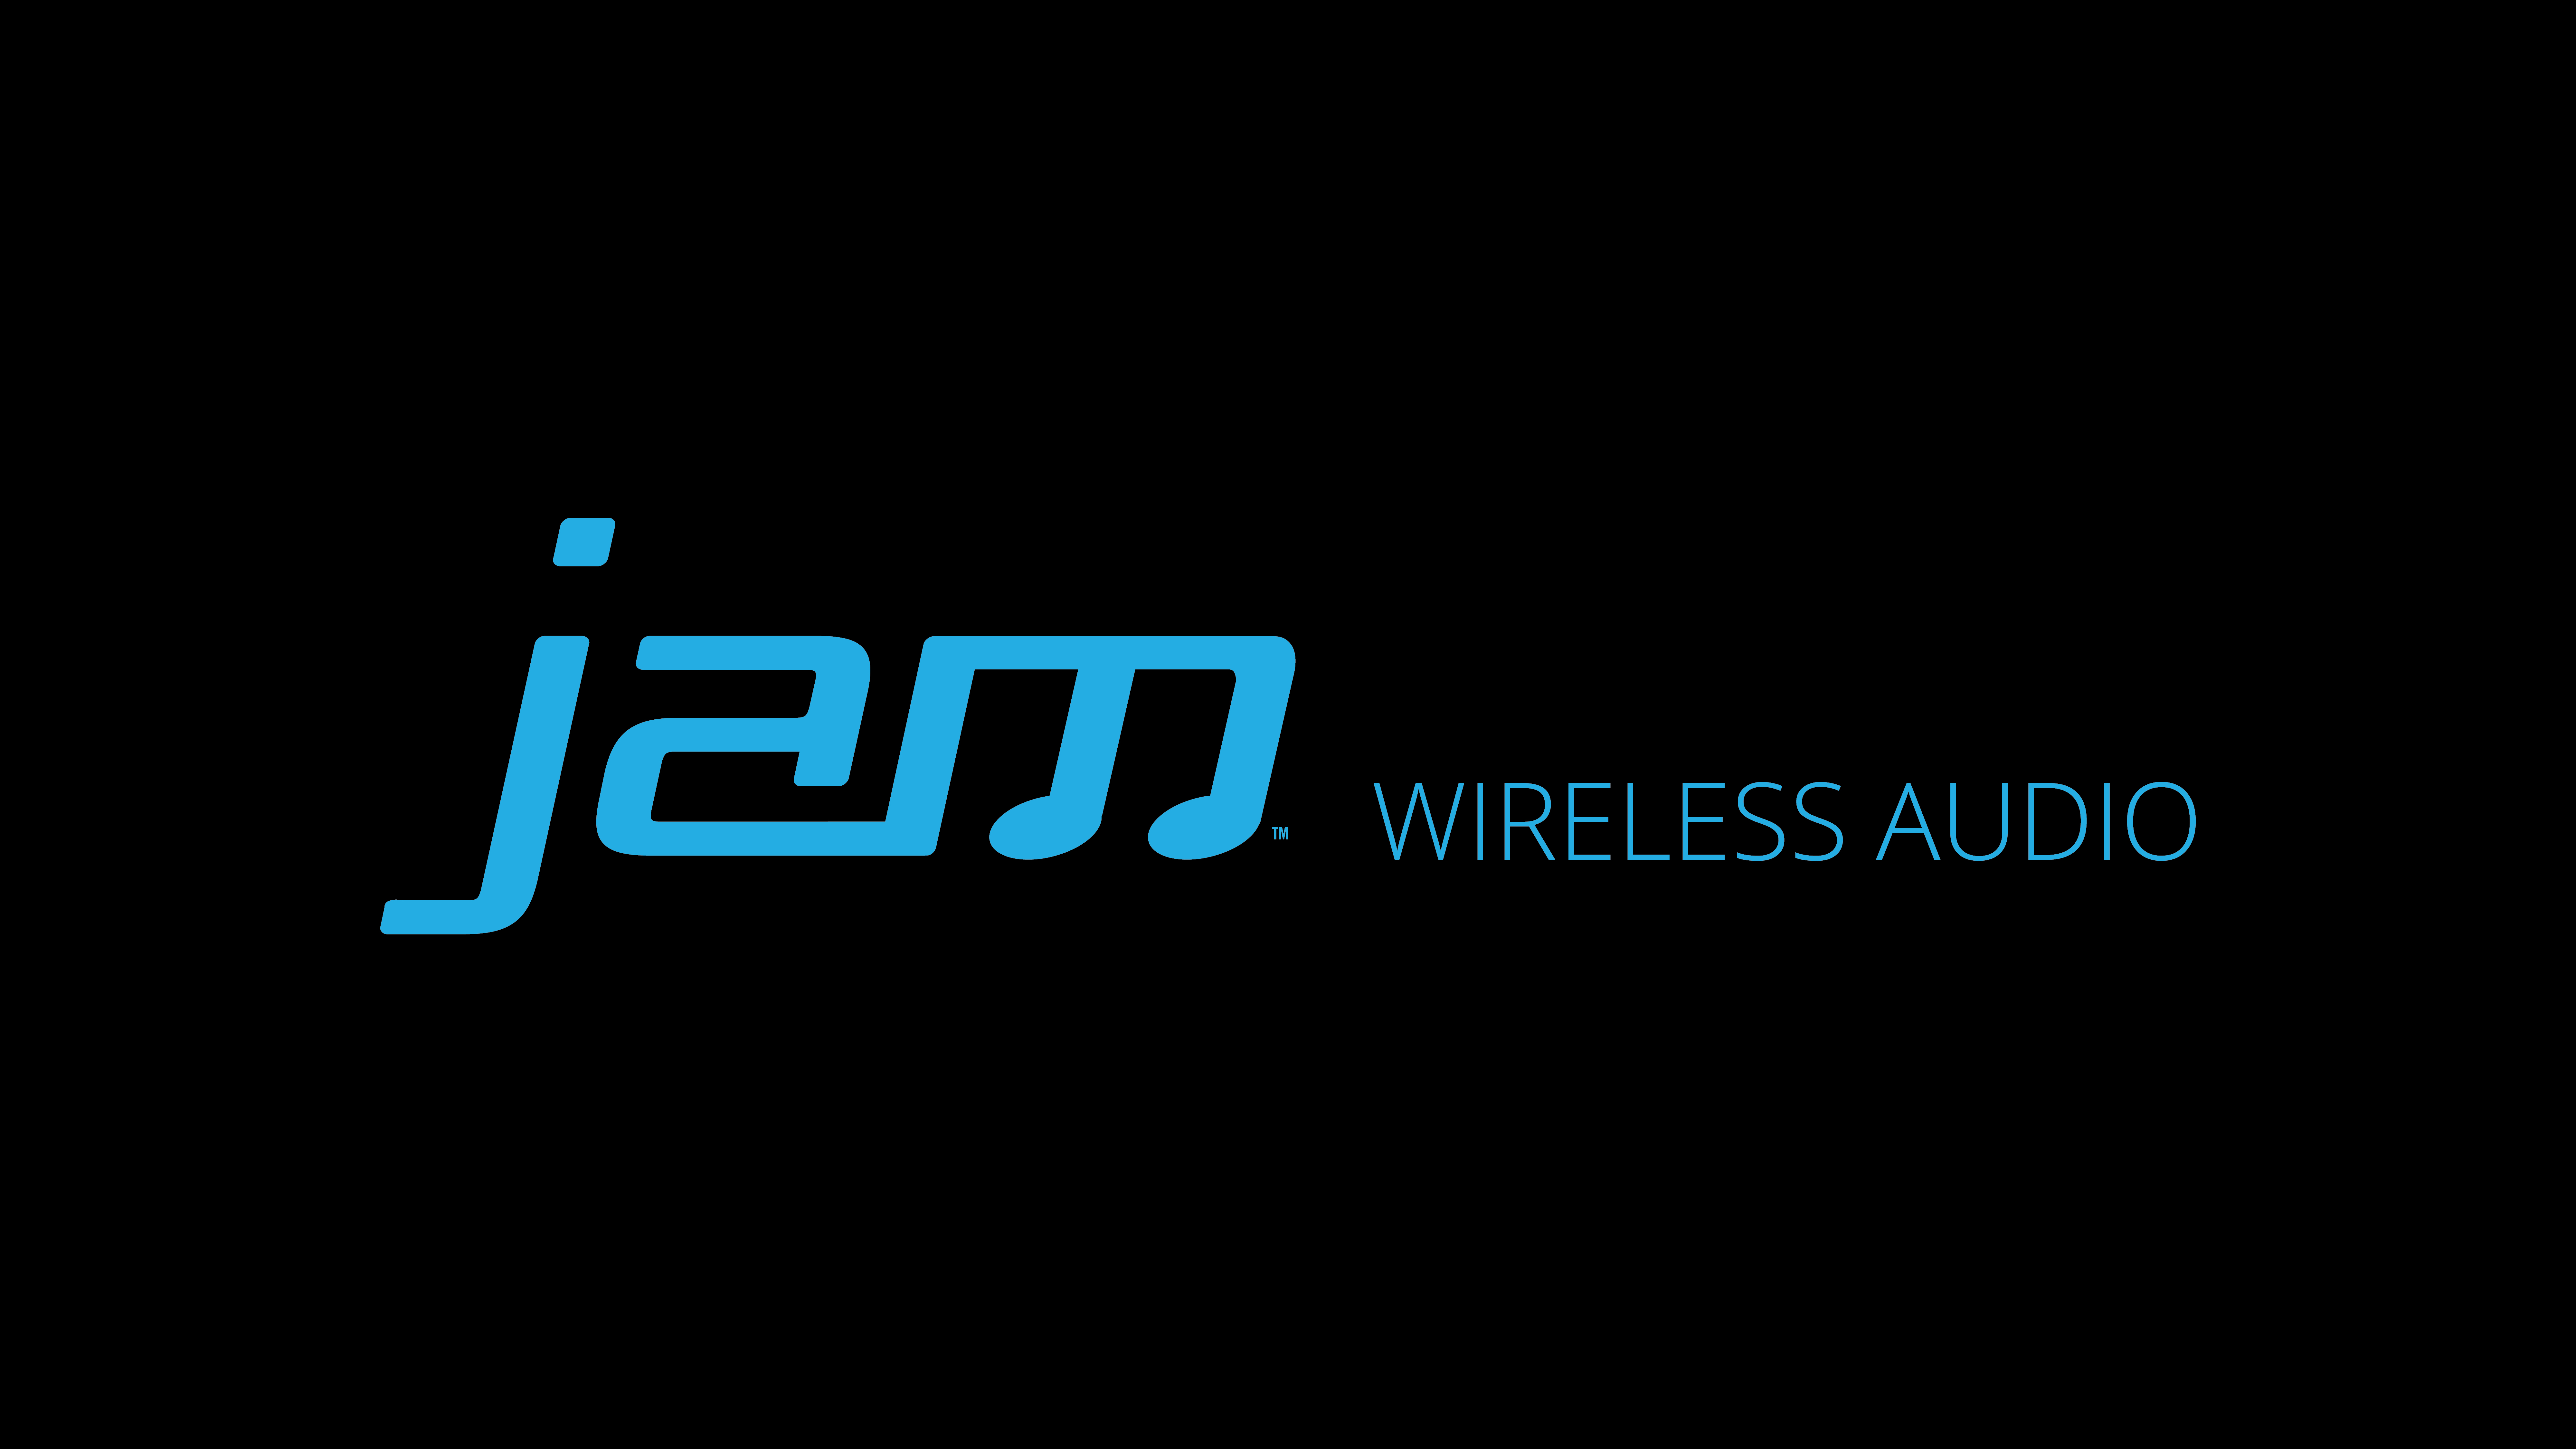 Jam_Wireless_Audio.jpg